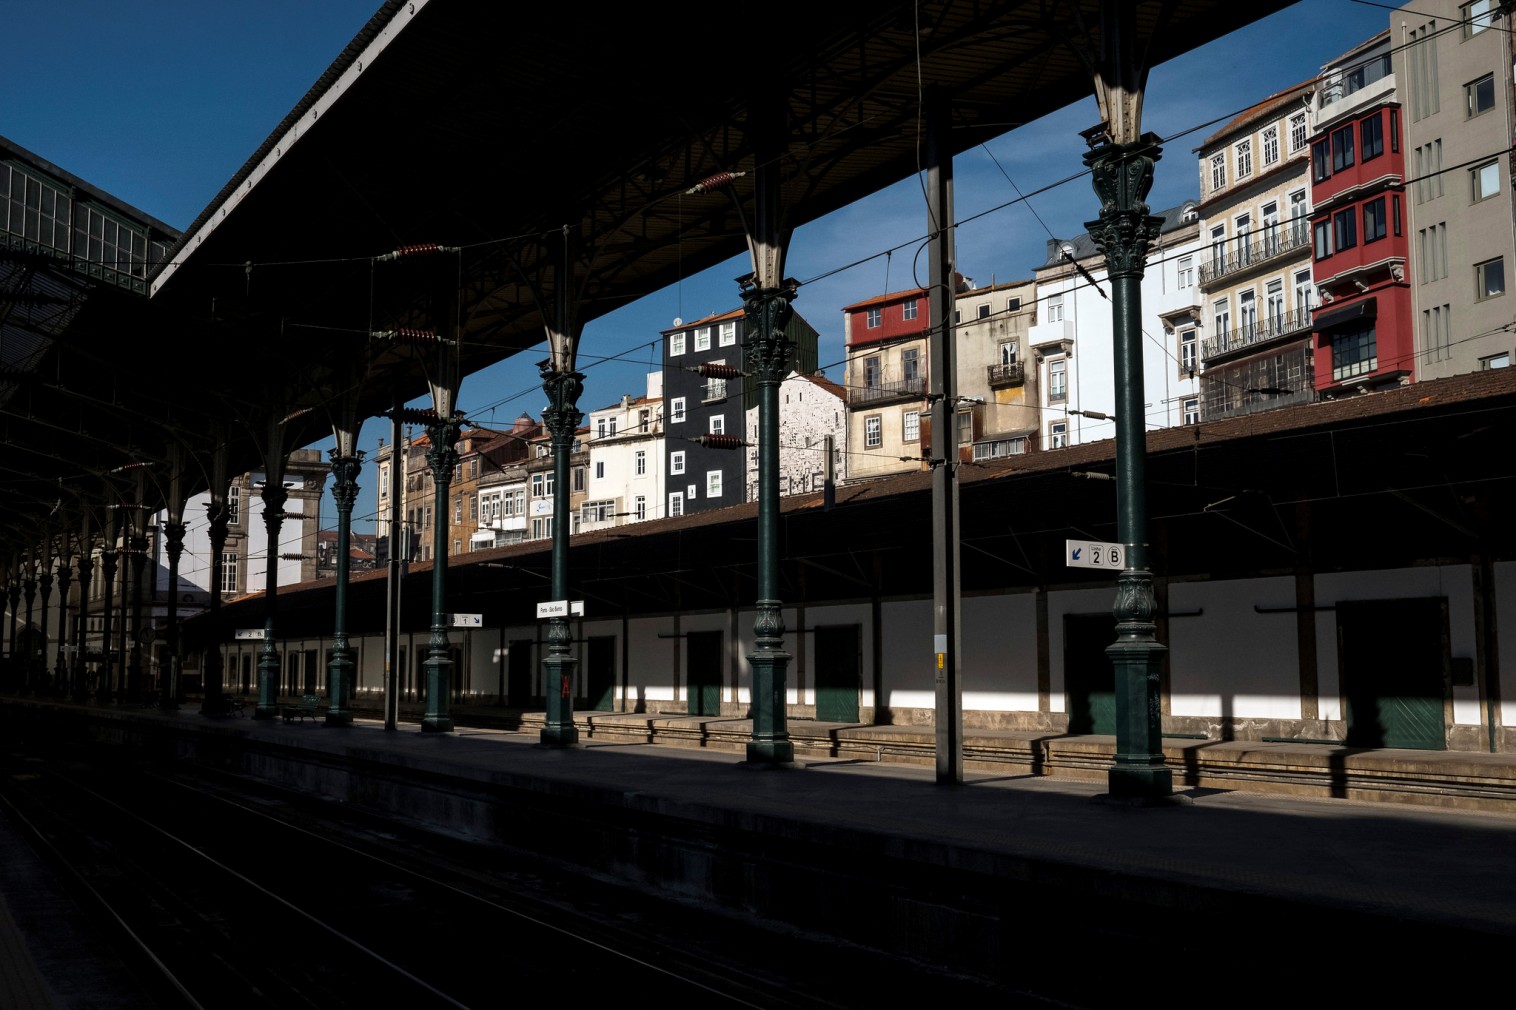 São Bento Railway Station - Transport company